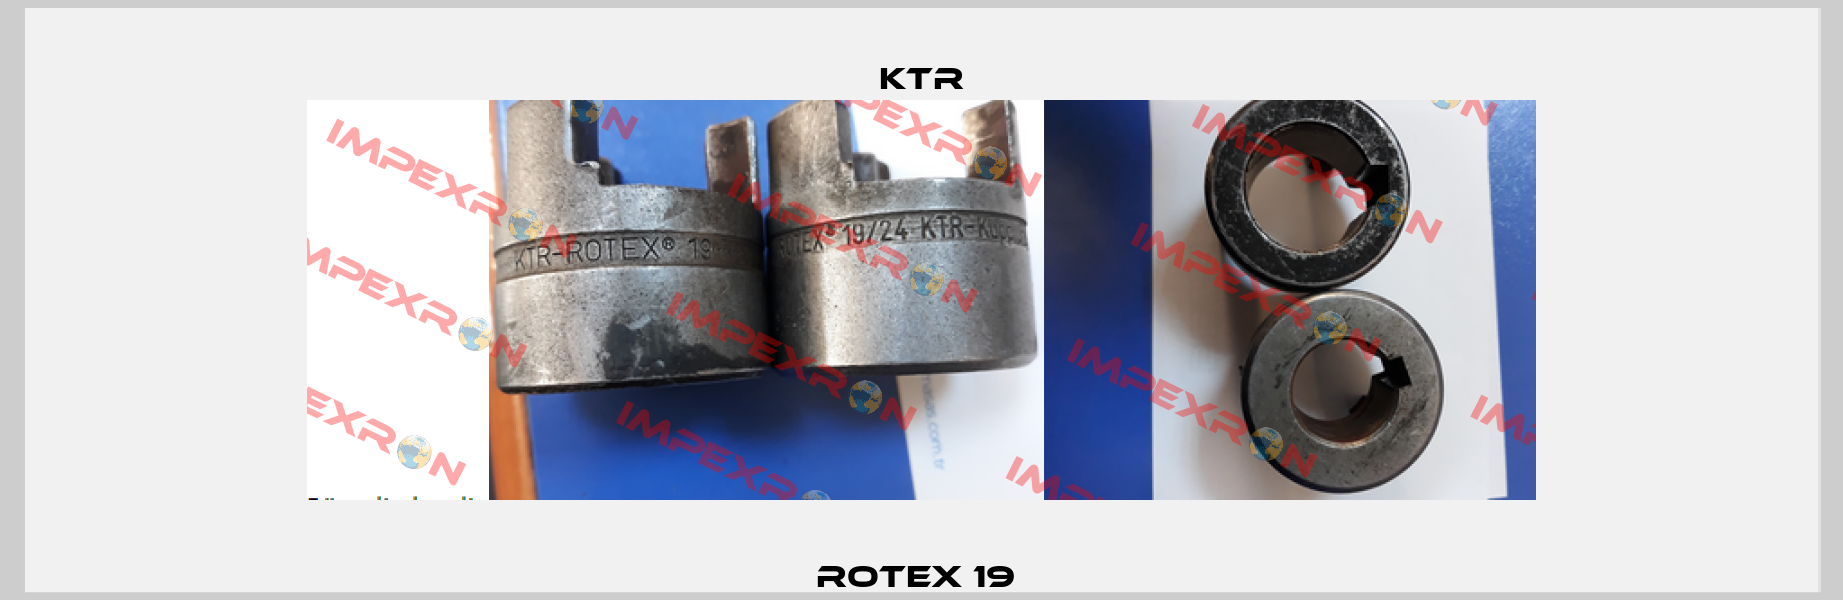 Rotex 19  KTR